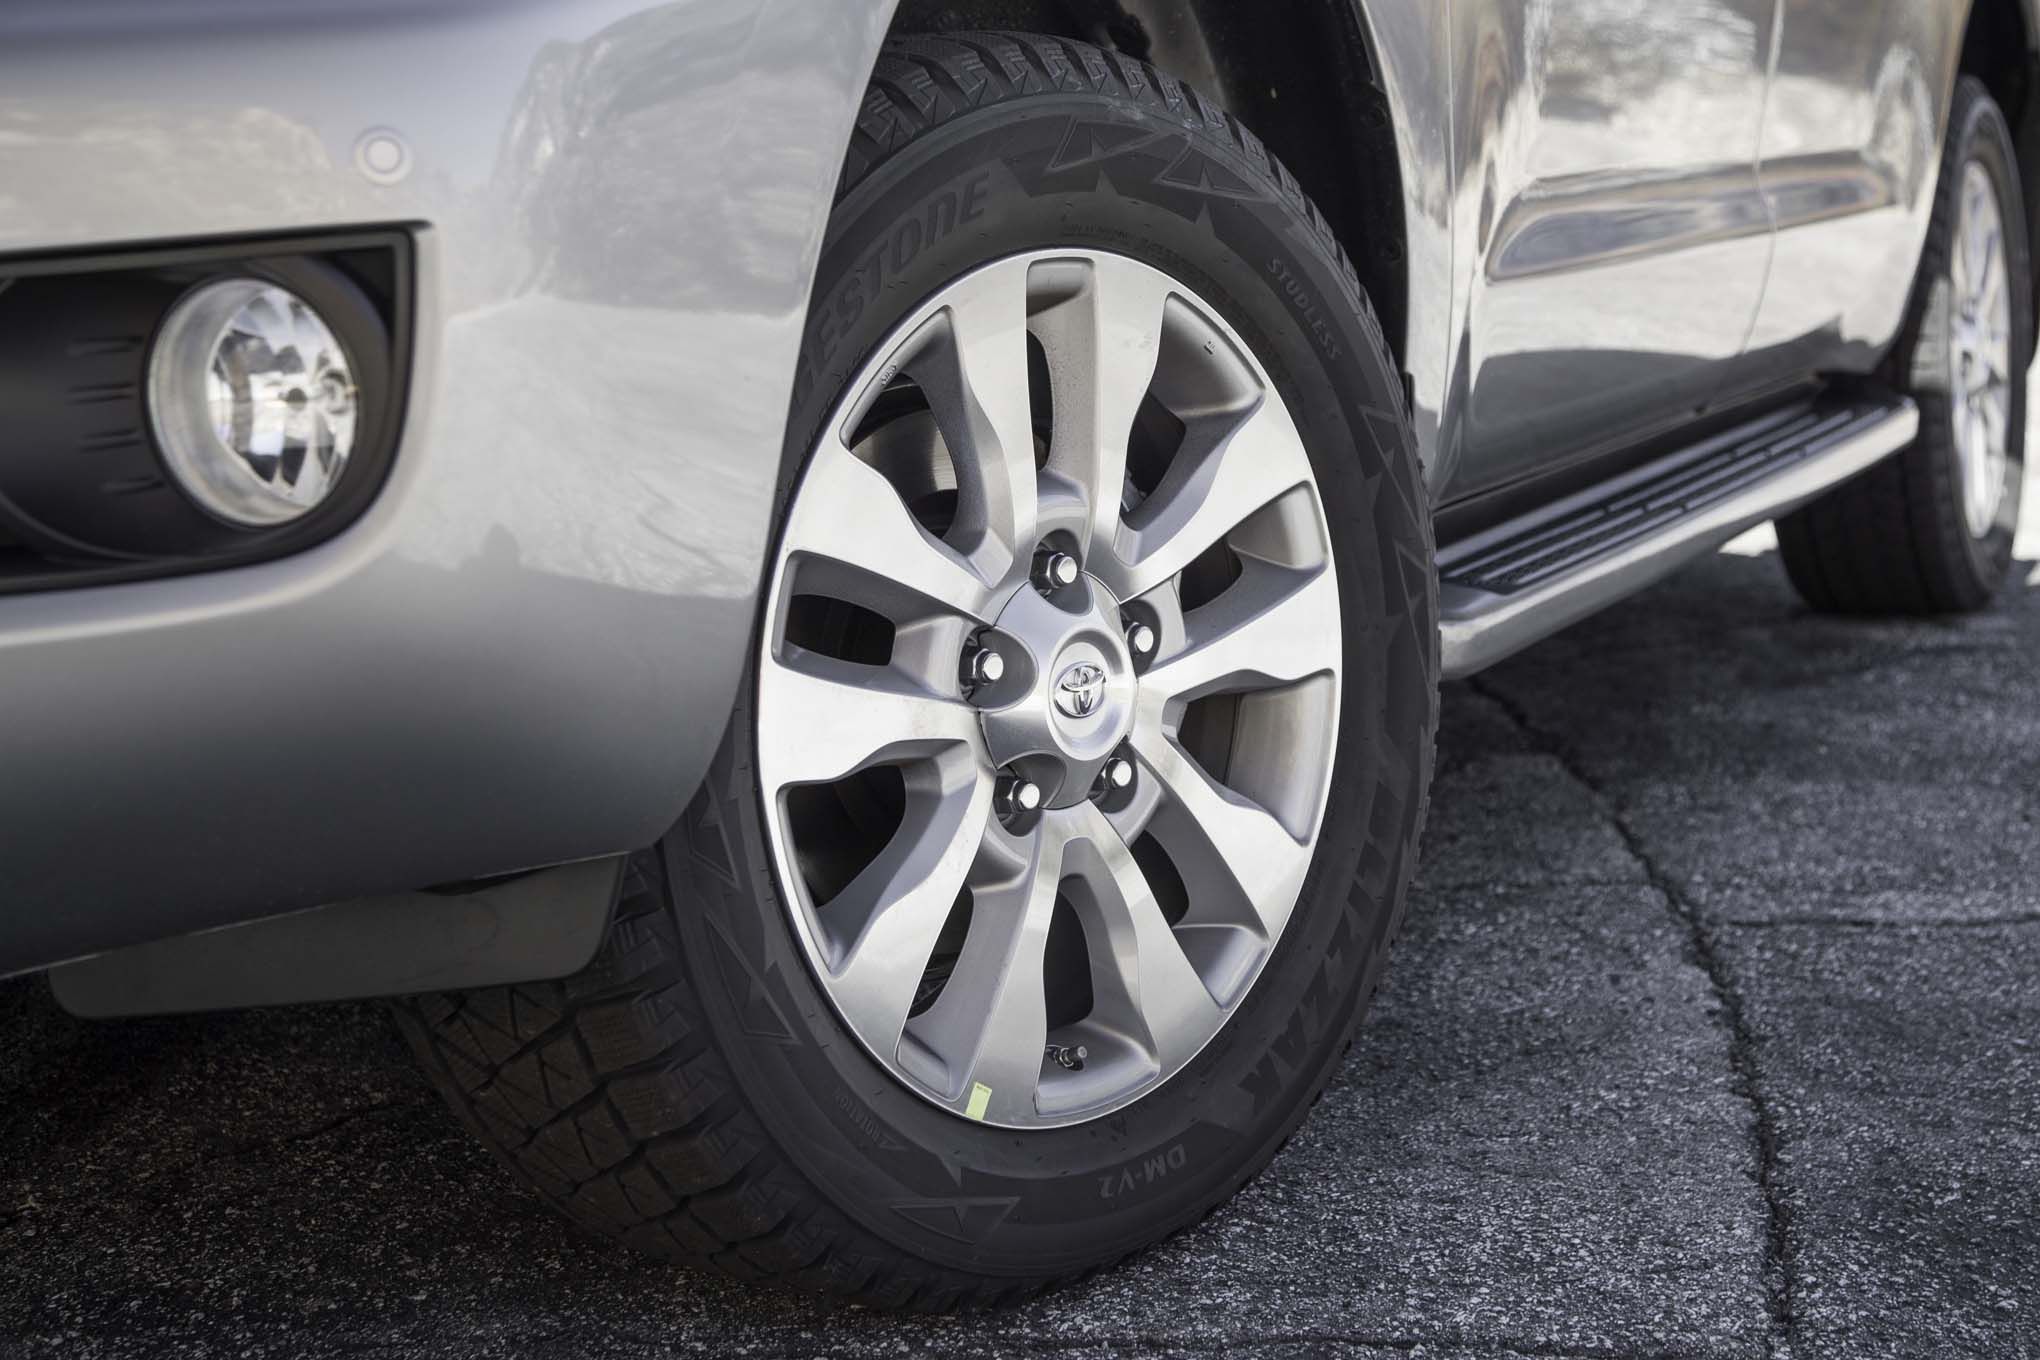 2017 Toyota Sequoia 4×4 Platinum Exterior View Wheel Profile (View 7 of 26)